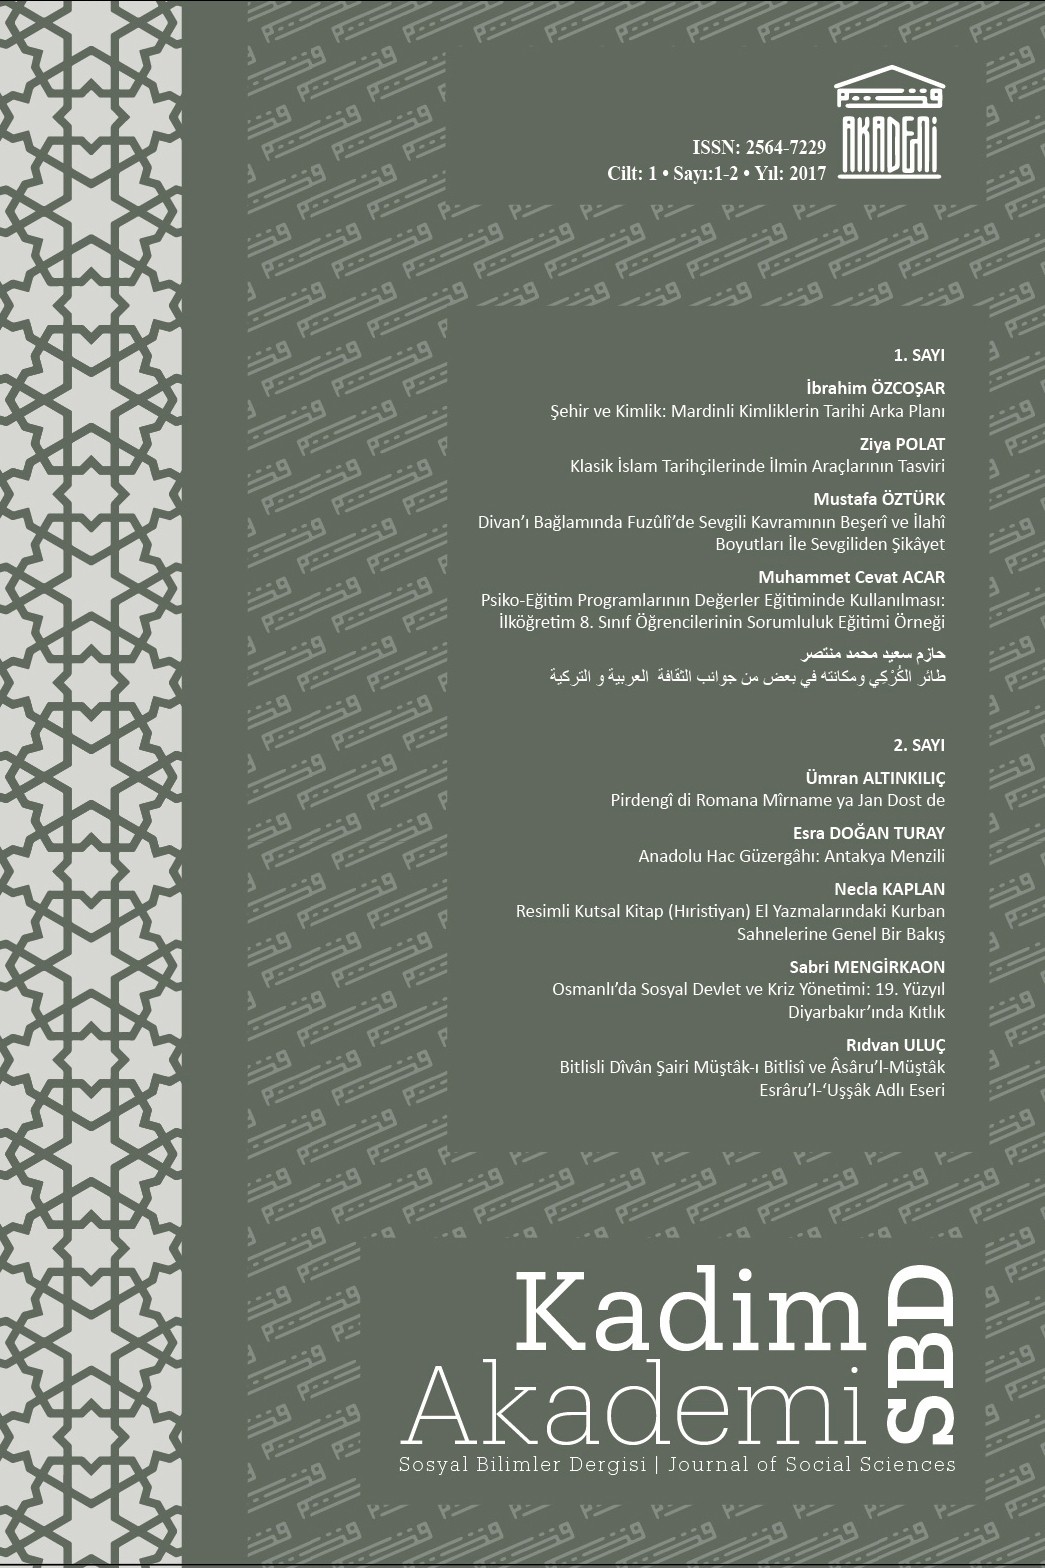 Kadim Akademi SBD-Cover